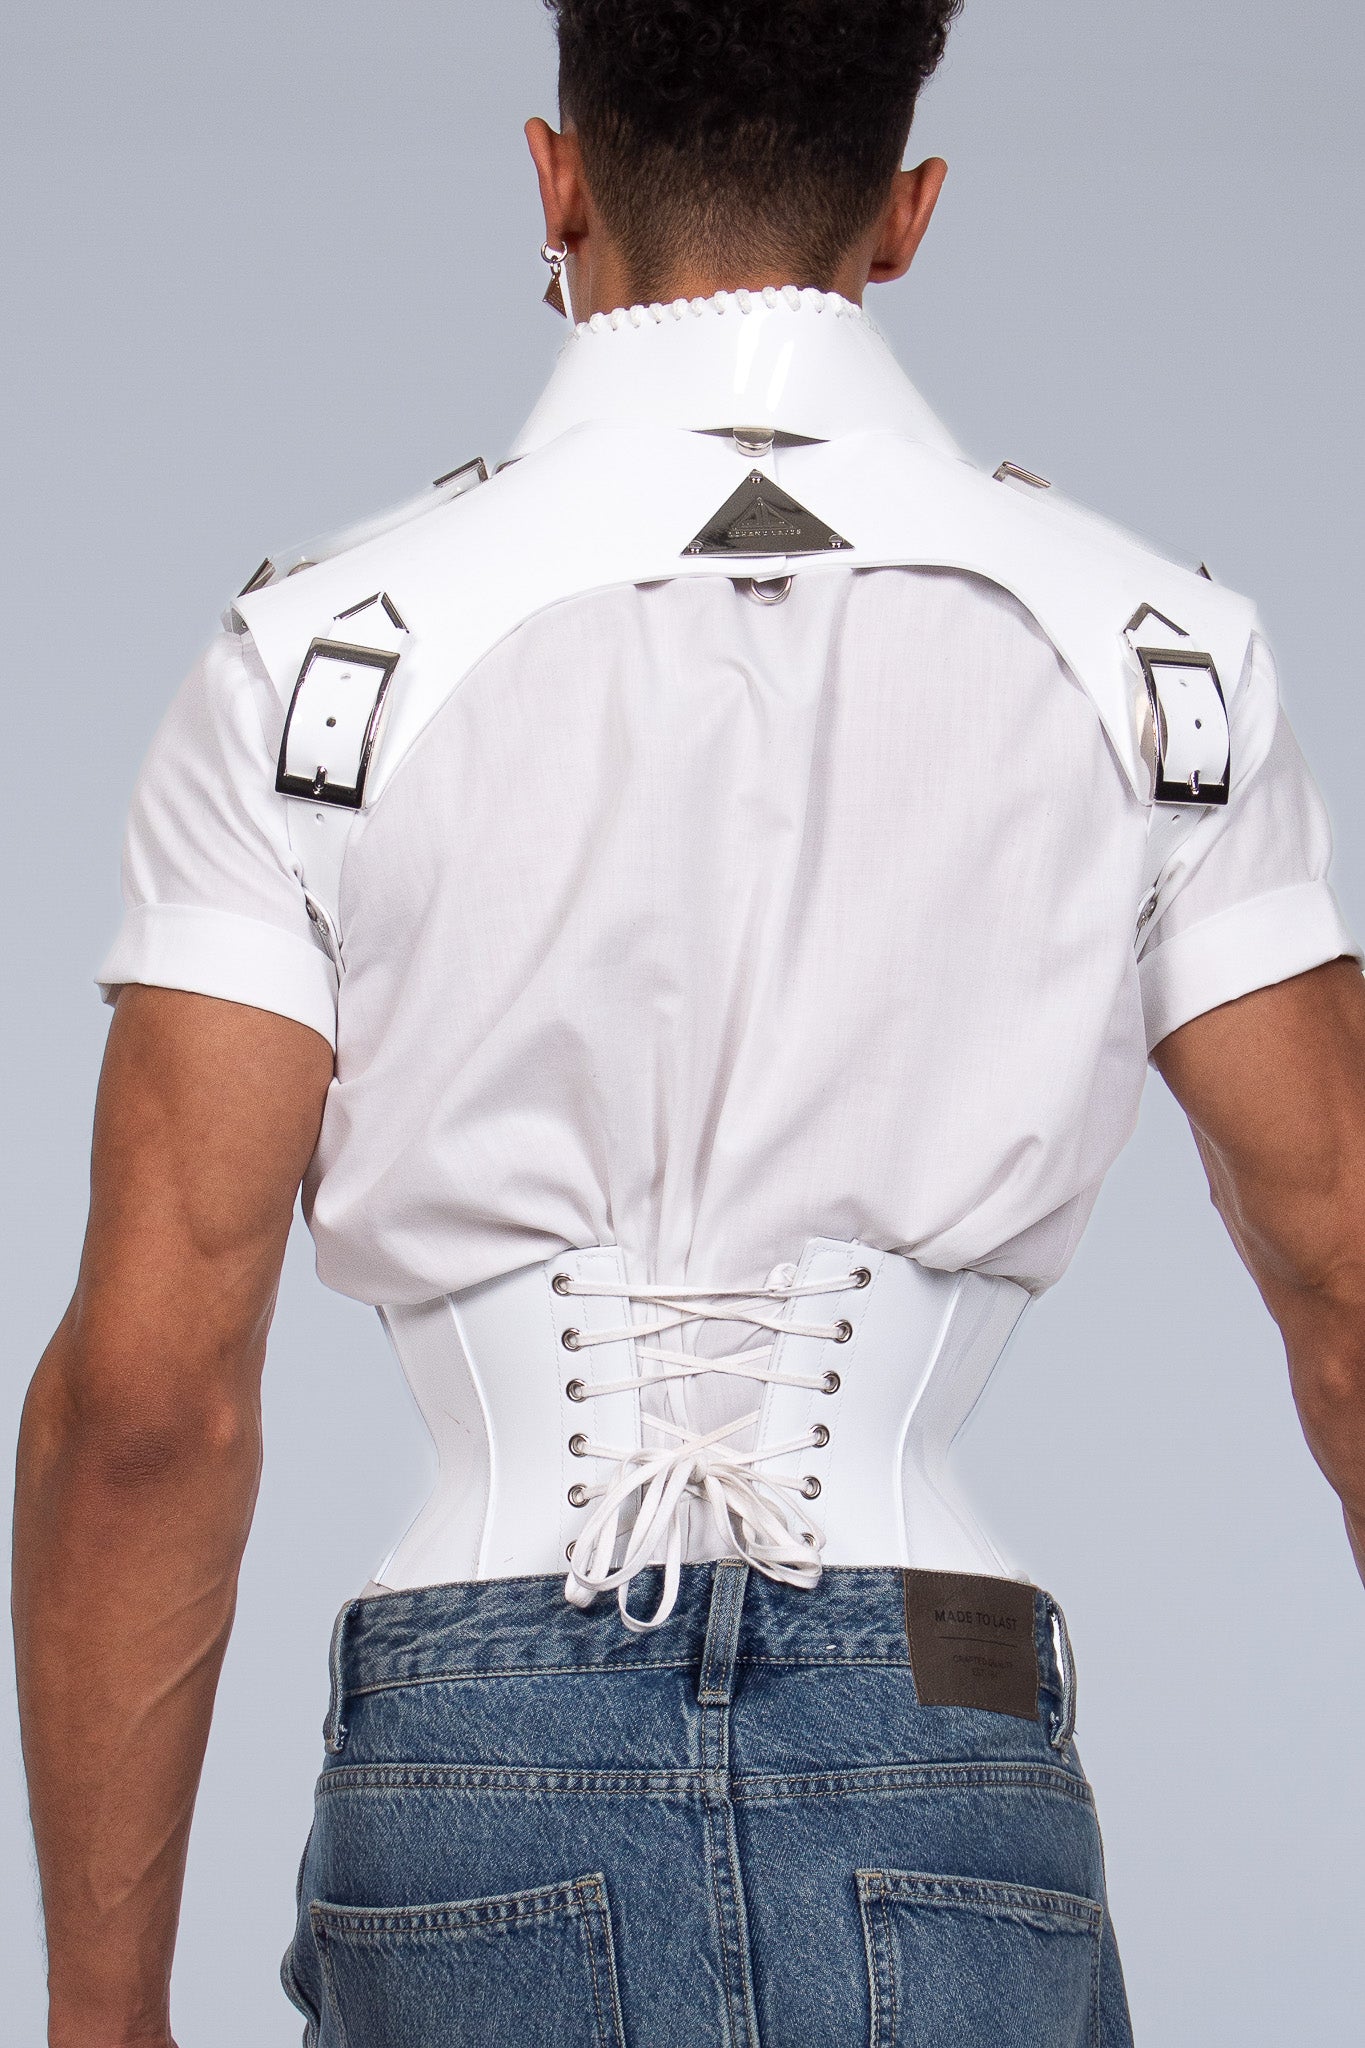 Glamorous shiny white Violetta corset belt for a sophisticated finish